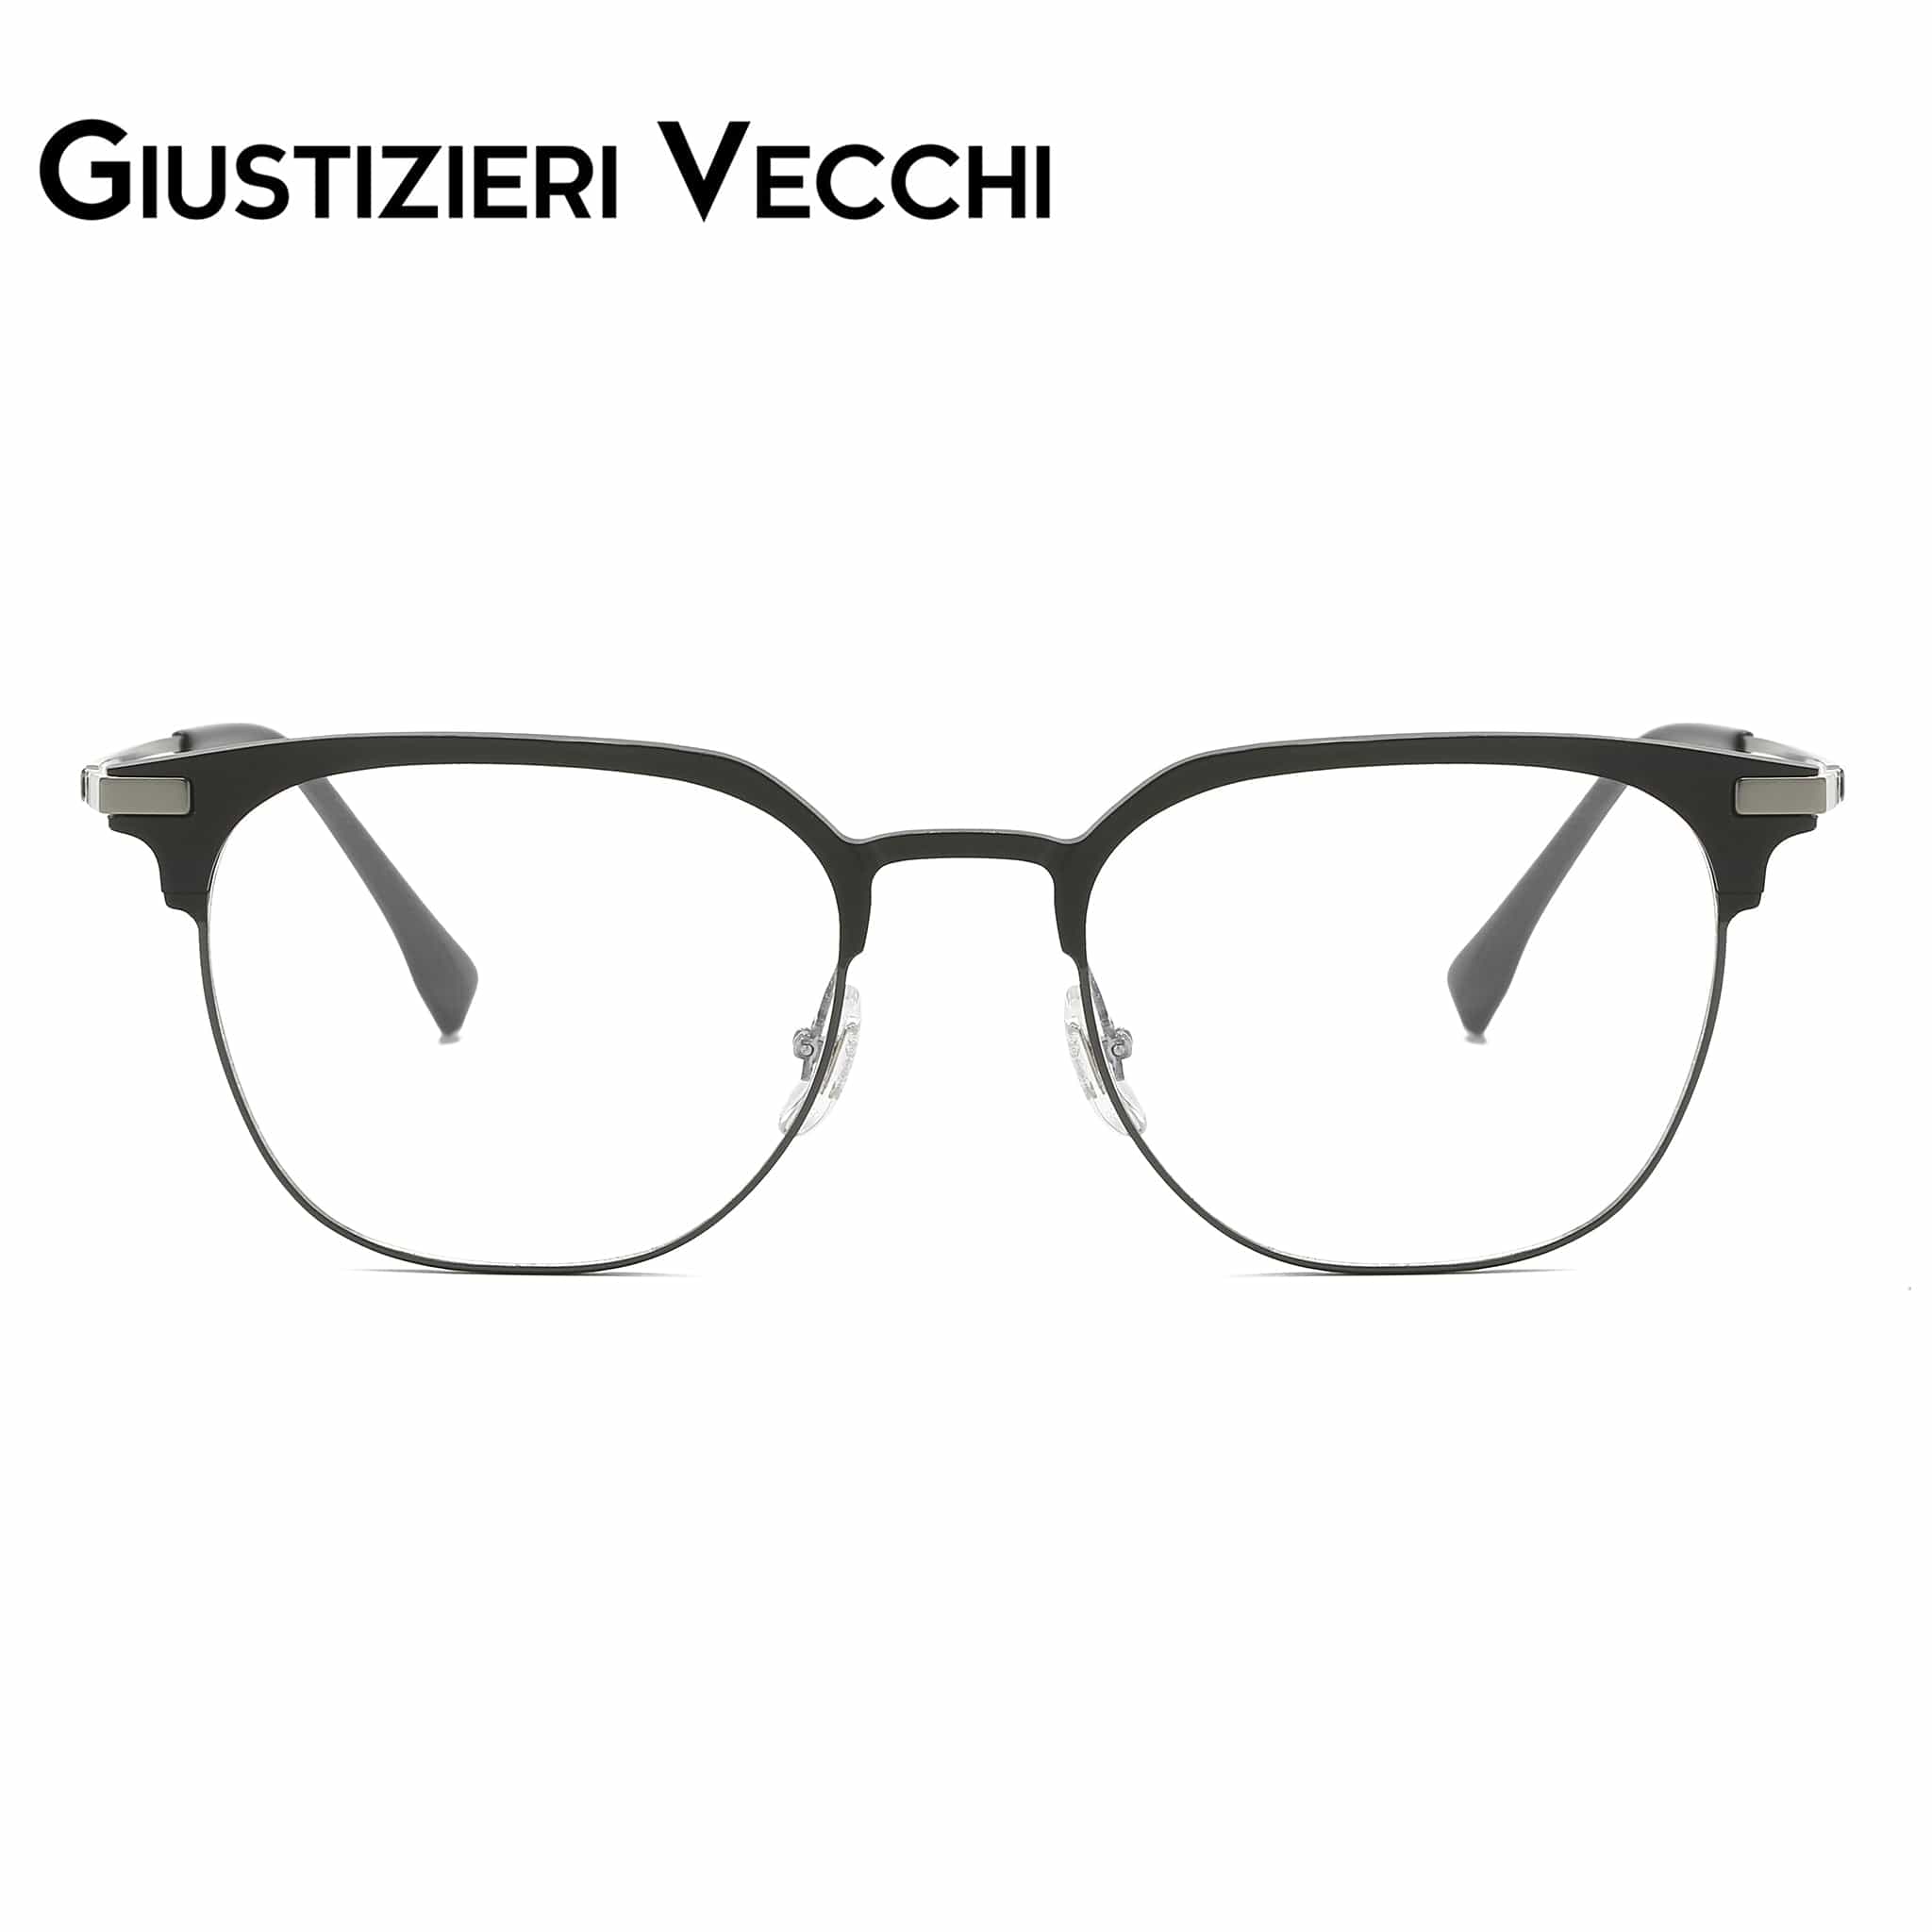 GIUSTIZIERI VECCHI Eyeglasses Small / Black with Grey MindHaze Uno